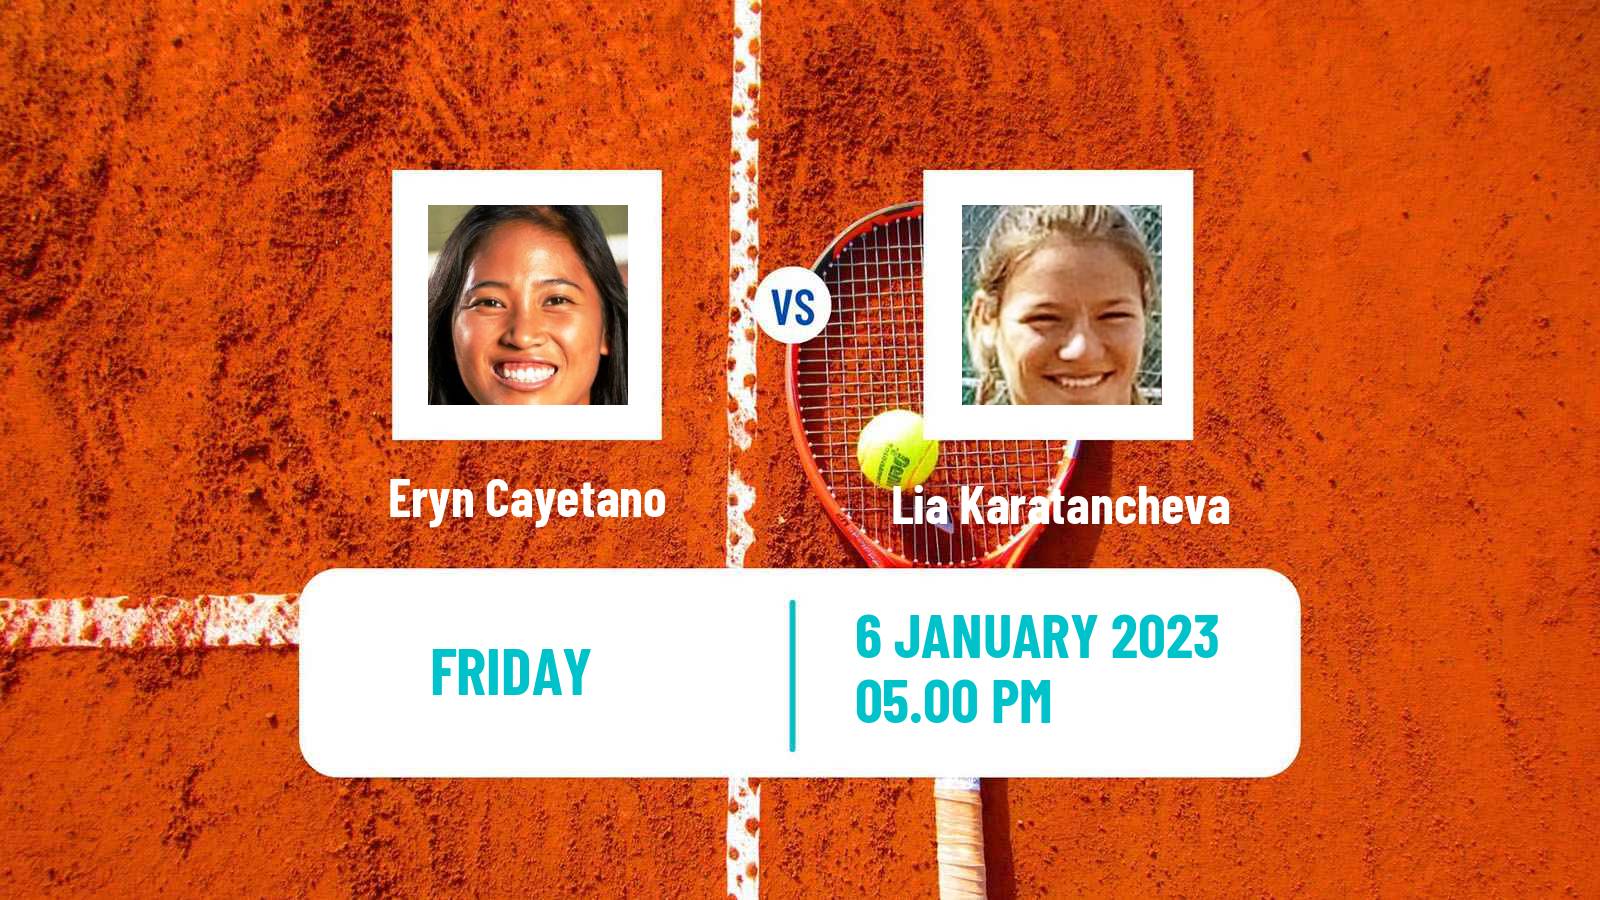 Tennis ITF Tournaments Eryn Cayetano - Lia Karatancheva